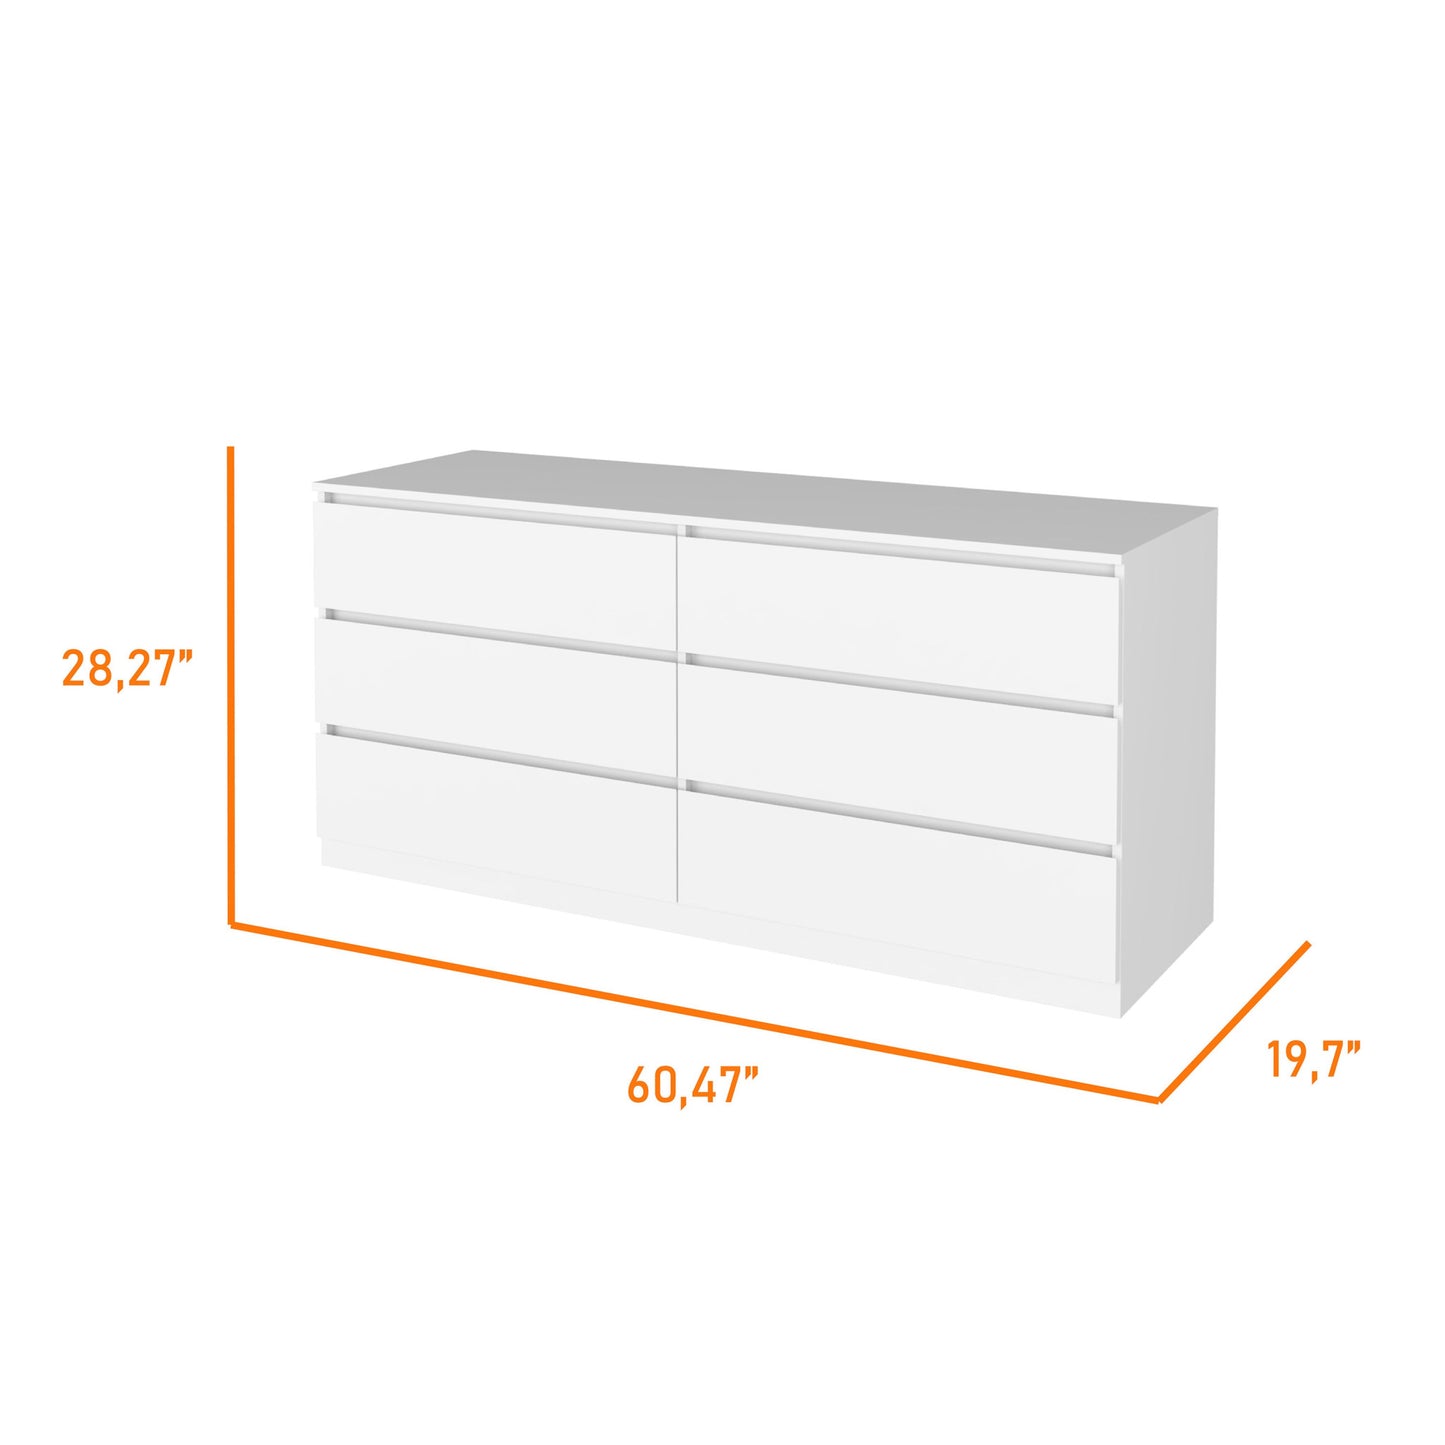 32" White Six Drawer Standard Dresser